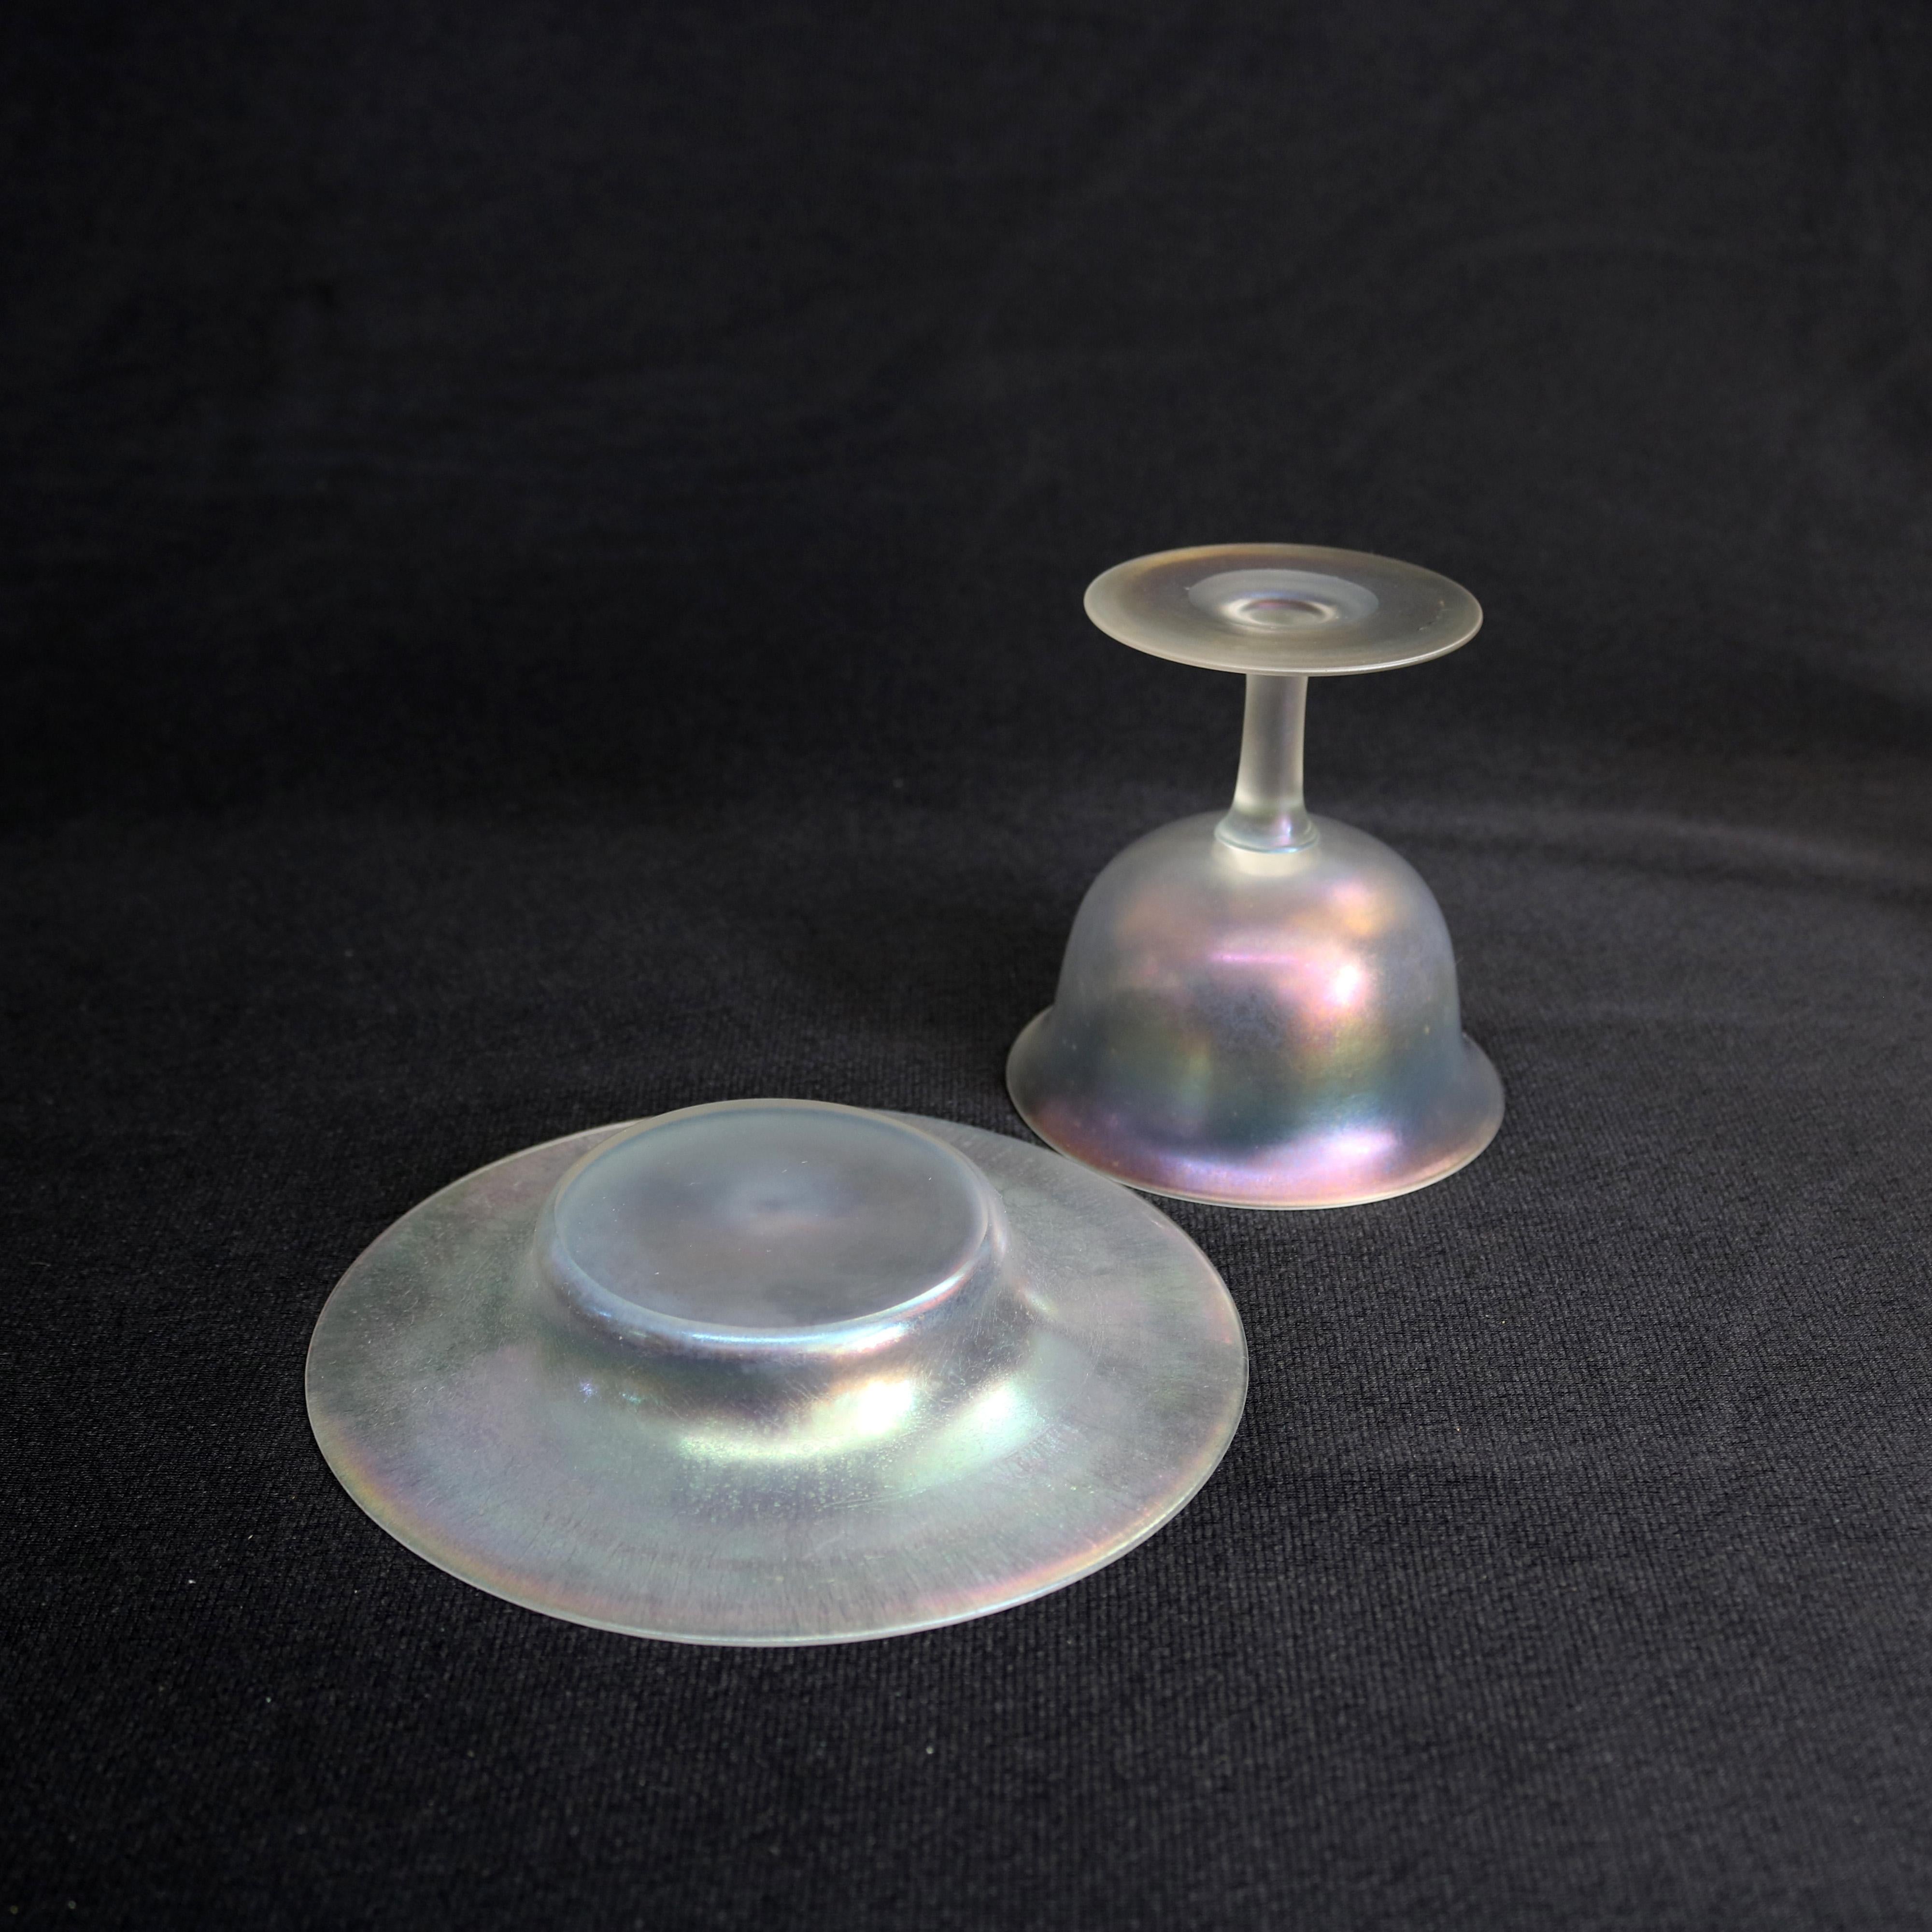 Steuben Art Glass Stemmed Sherbet Goblets with Saucers, circa 1930s 1